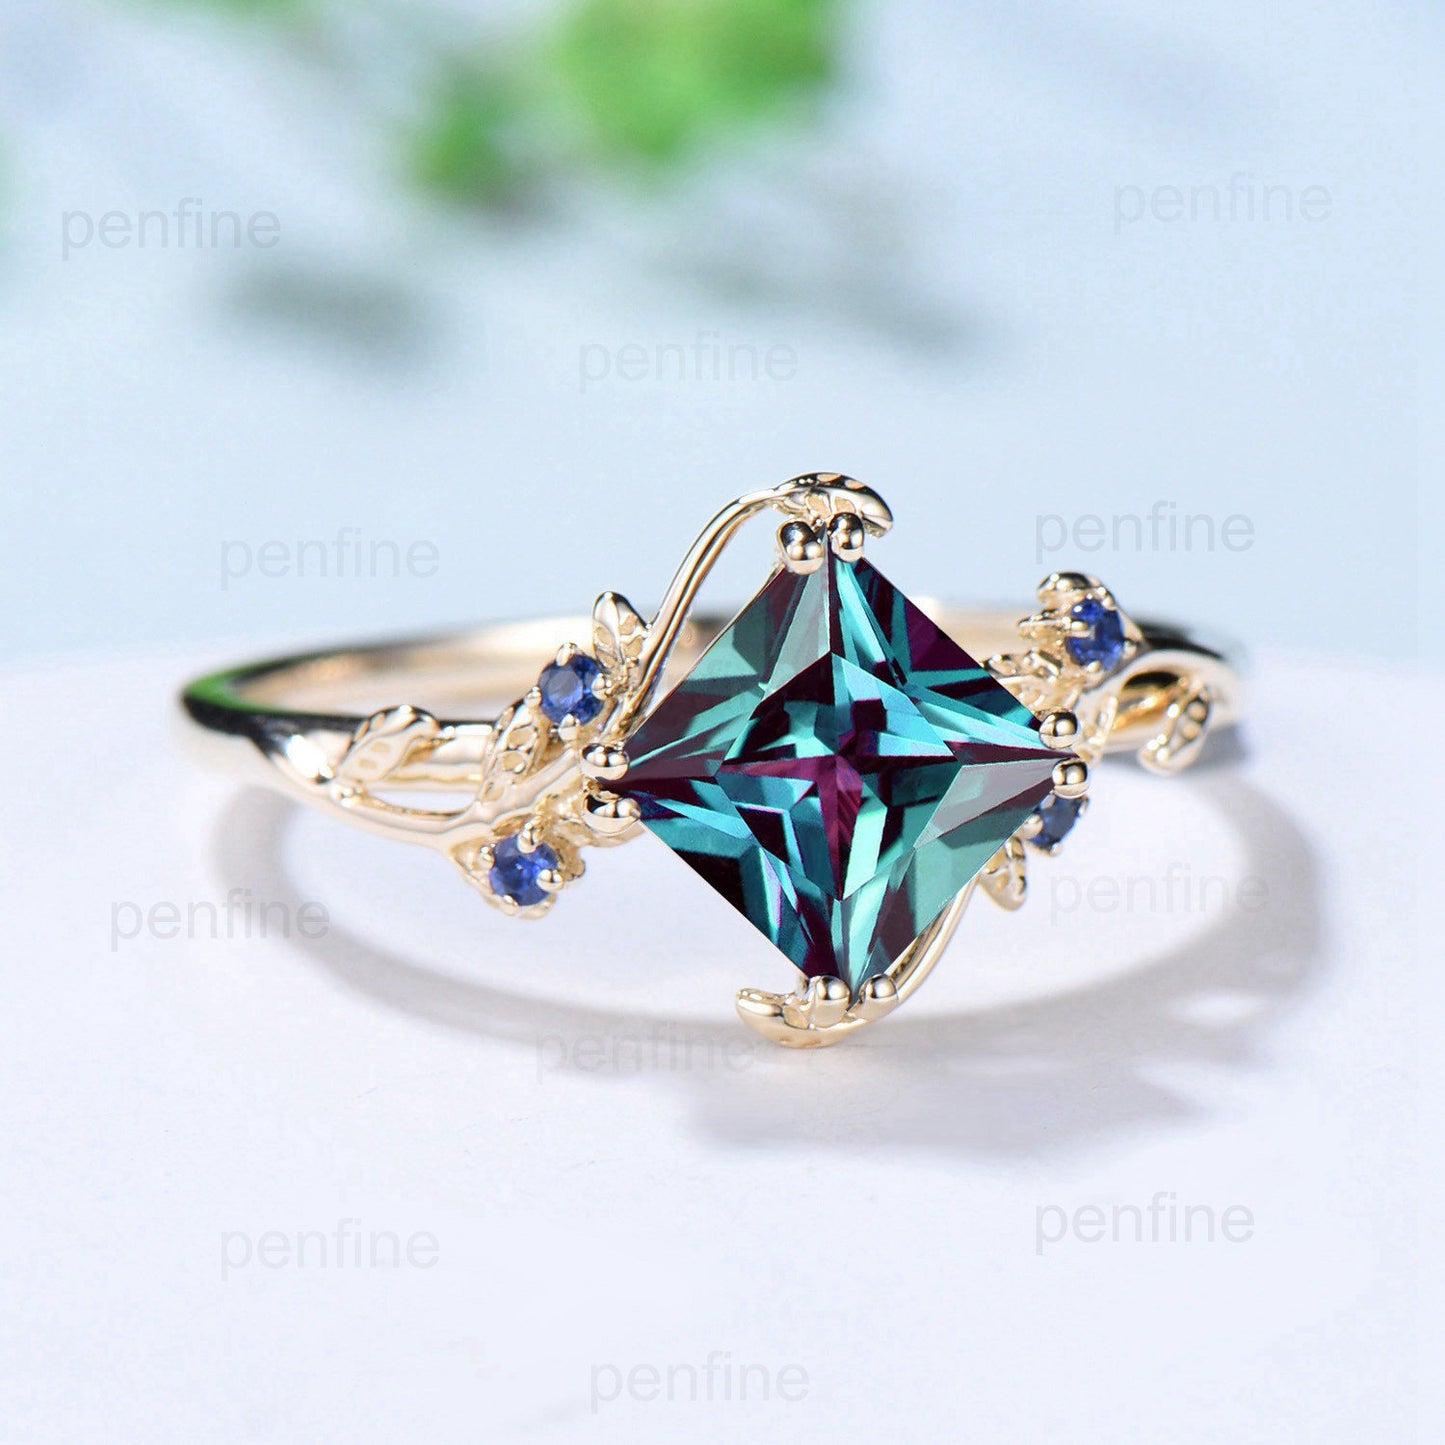 Nature Inspired Princess Cut Alexandrite  Engagement Ring Vintage Leaf Branch Color Change Stone Ring Twig Vine Wedding Ring Proposal Gifts - PENFINE